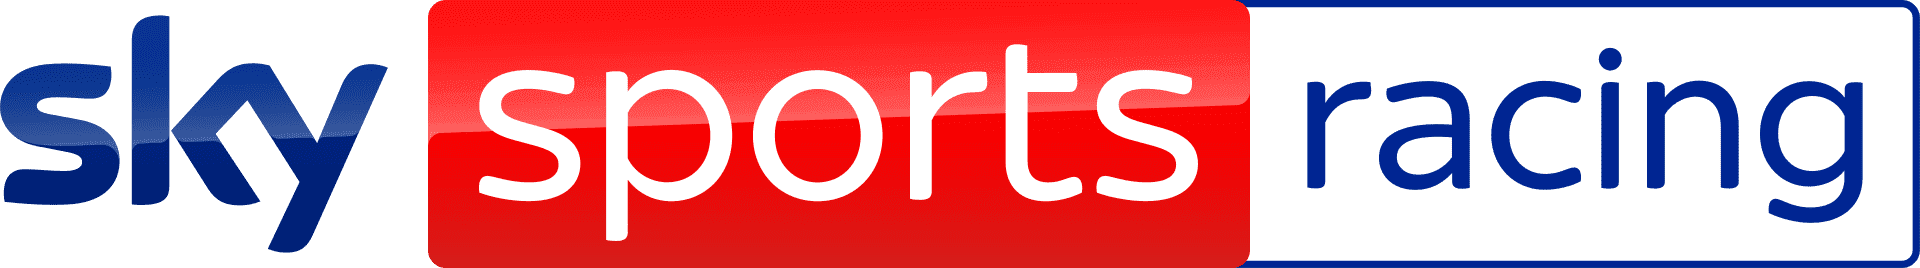 Sky_Sports_Racing_logo_2020.svg